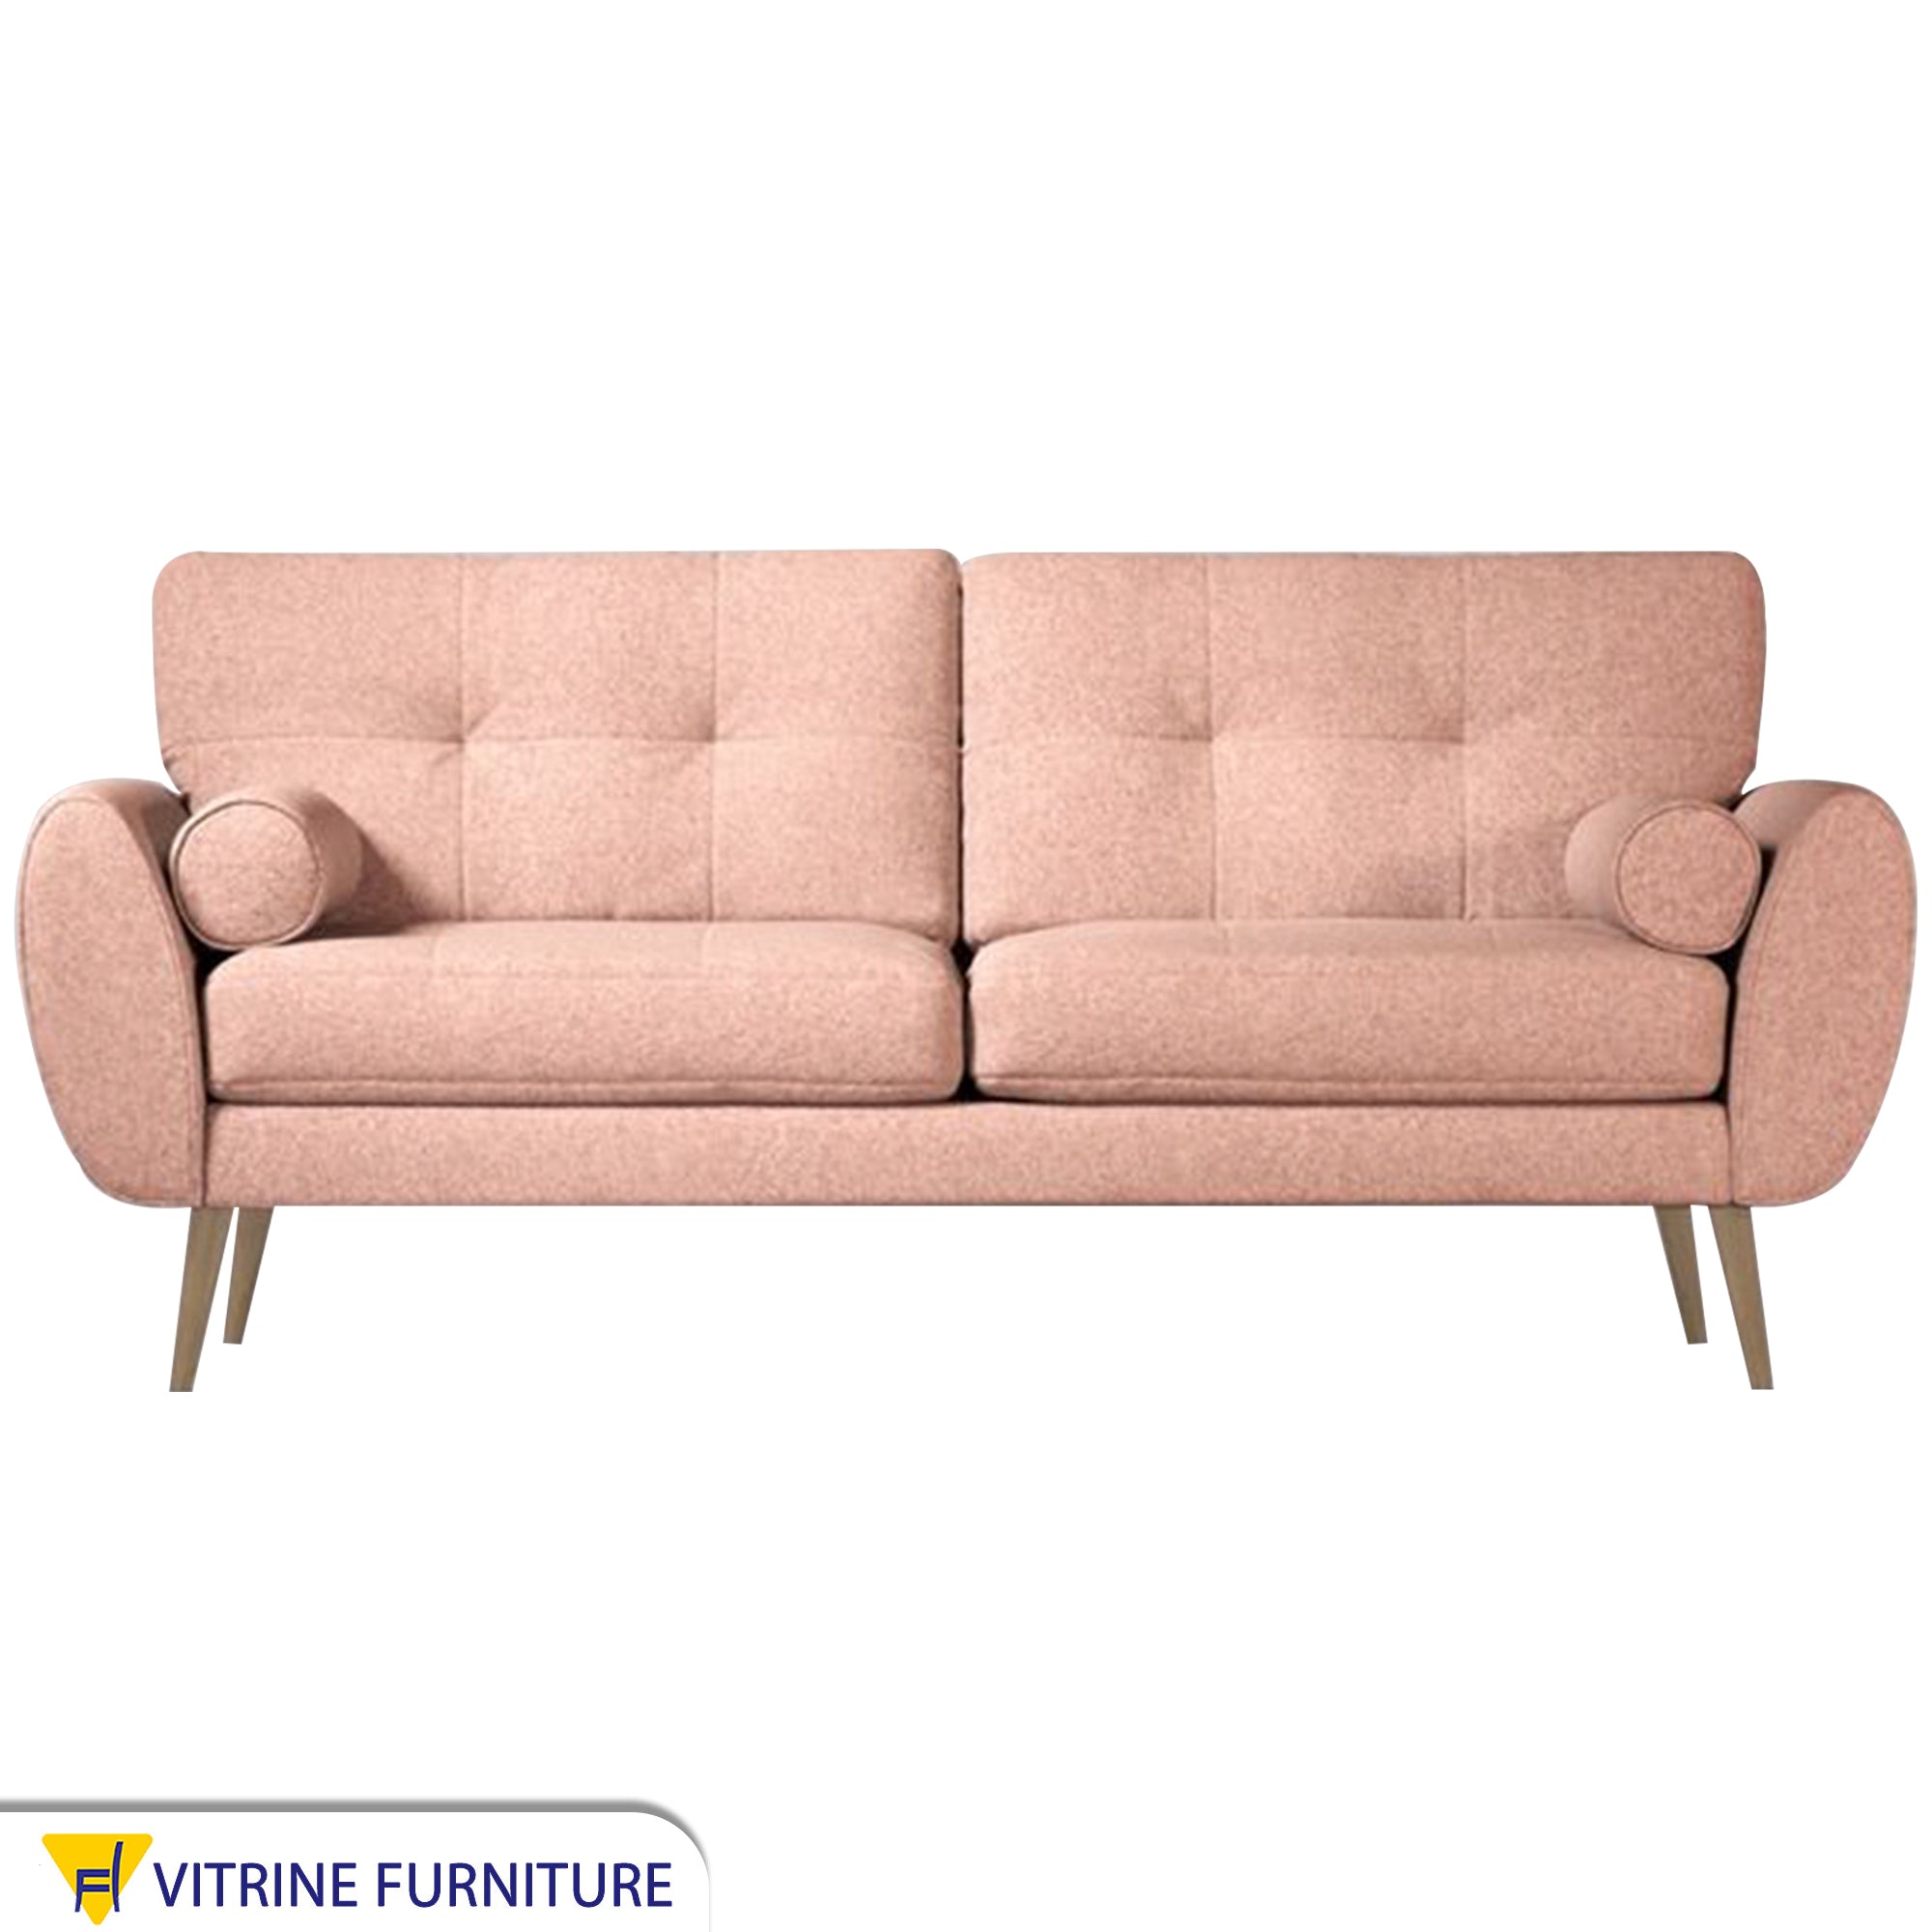 Pink sofa high on elegant wooden legs